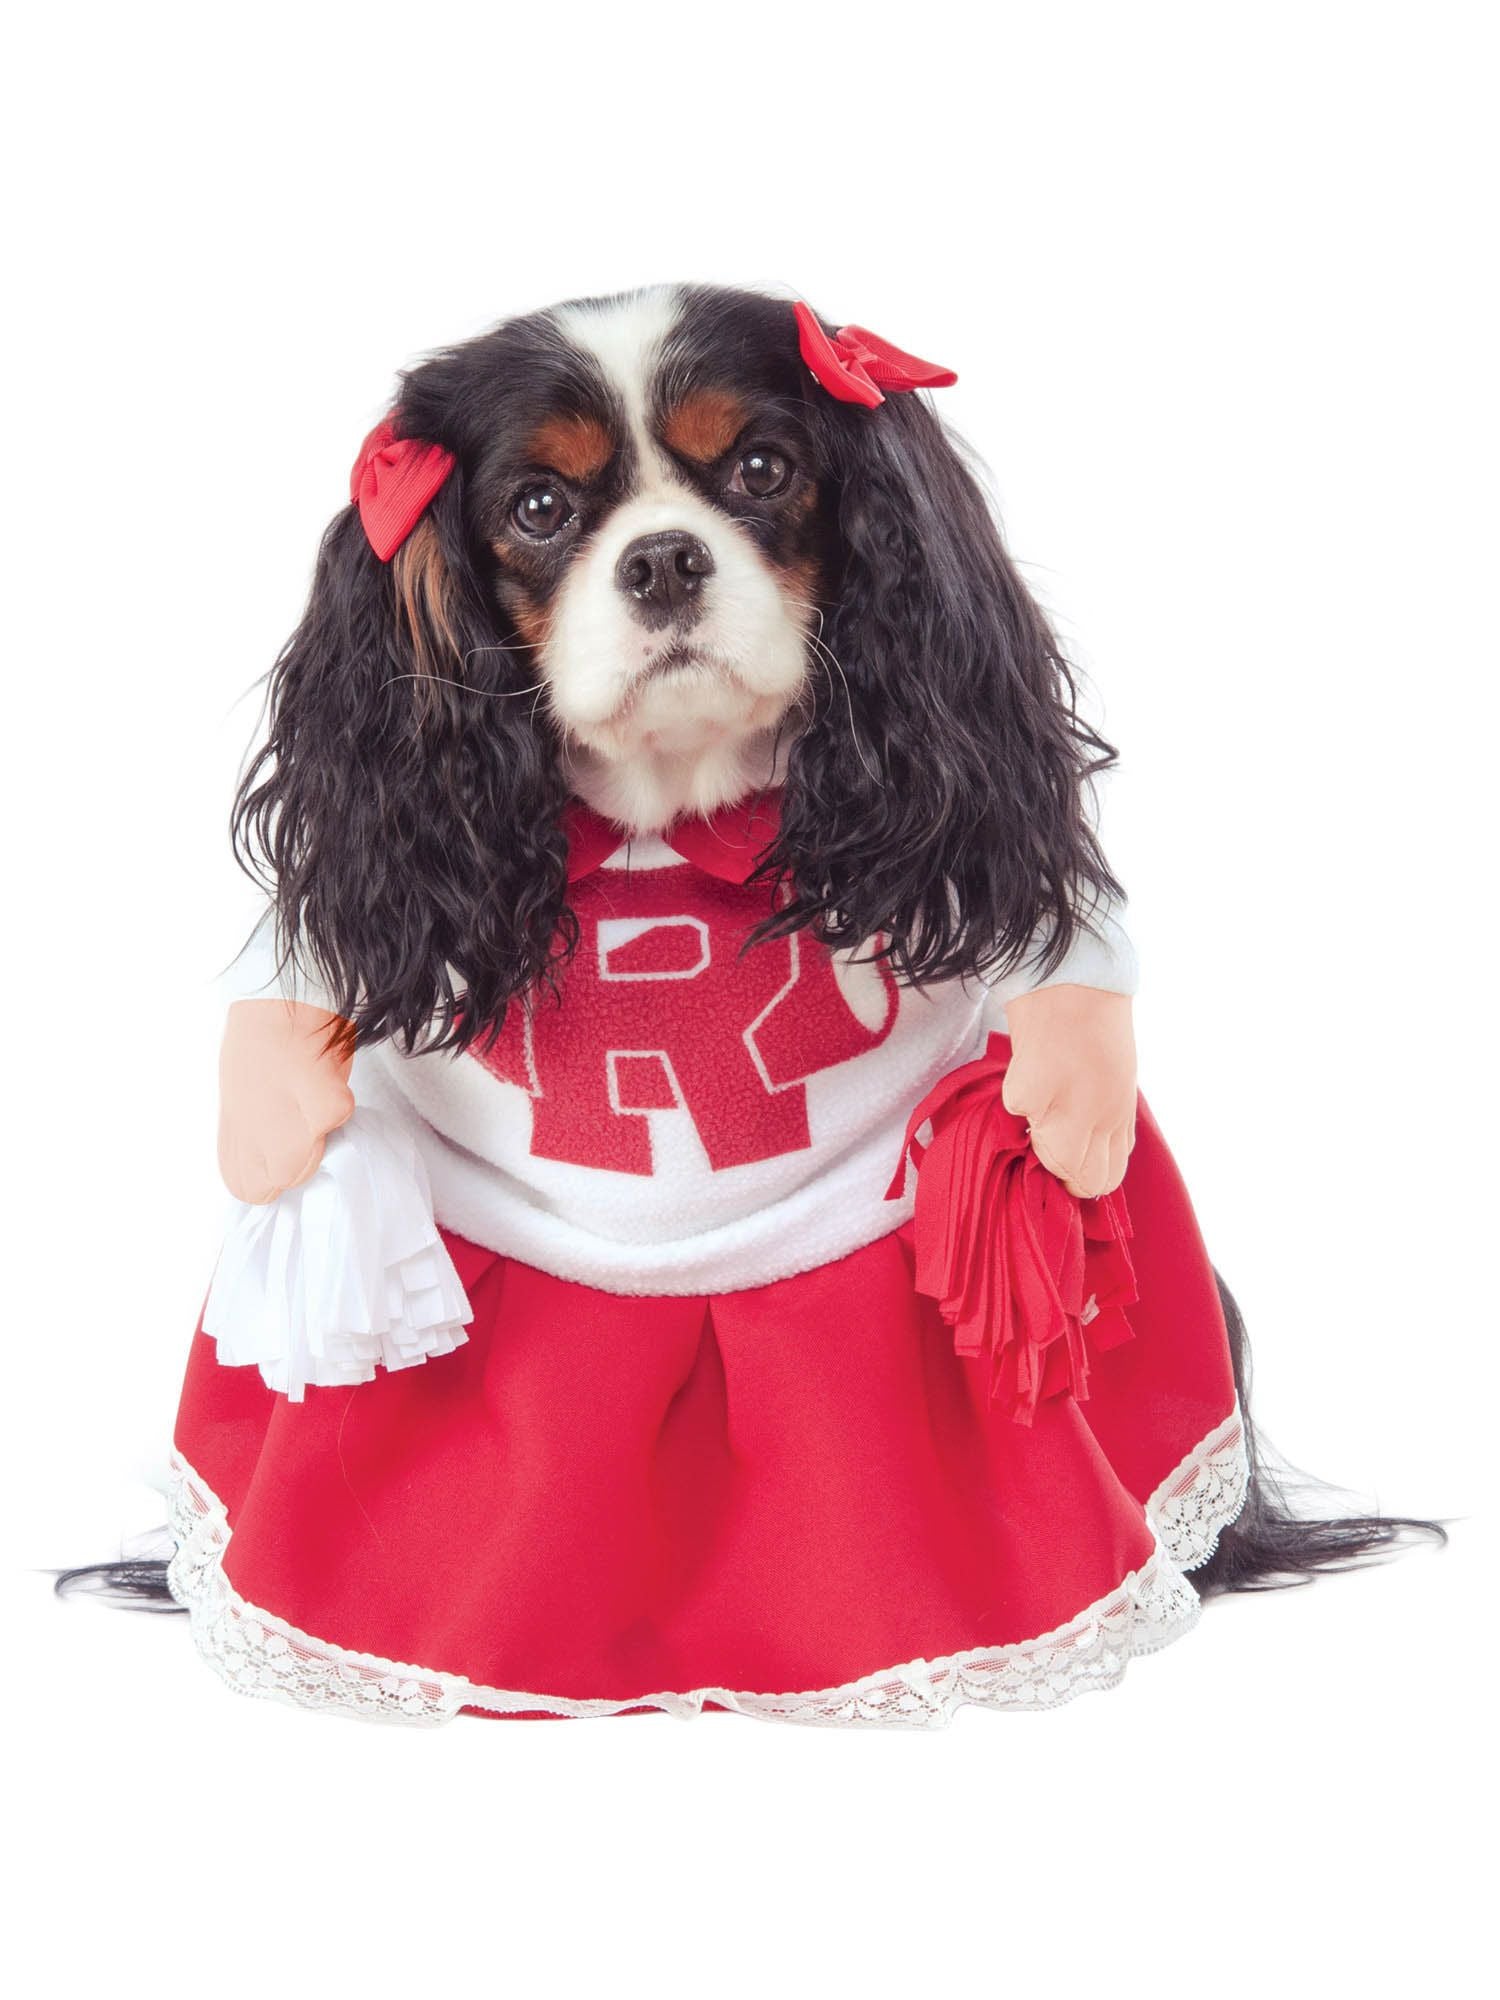 Grease Rydell High Cheerleader Walking Pet Costume - costumes.com